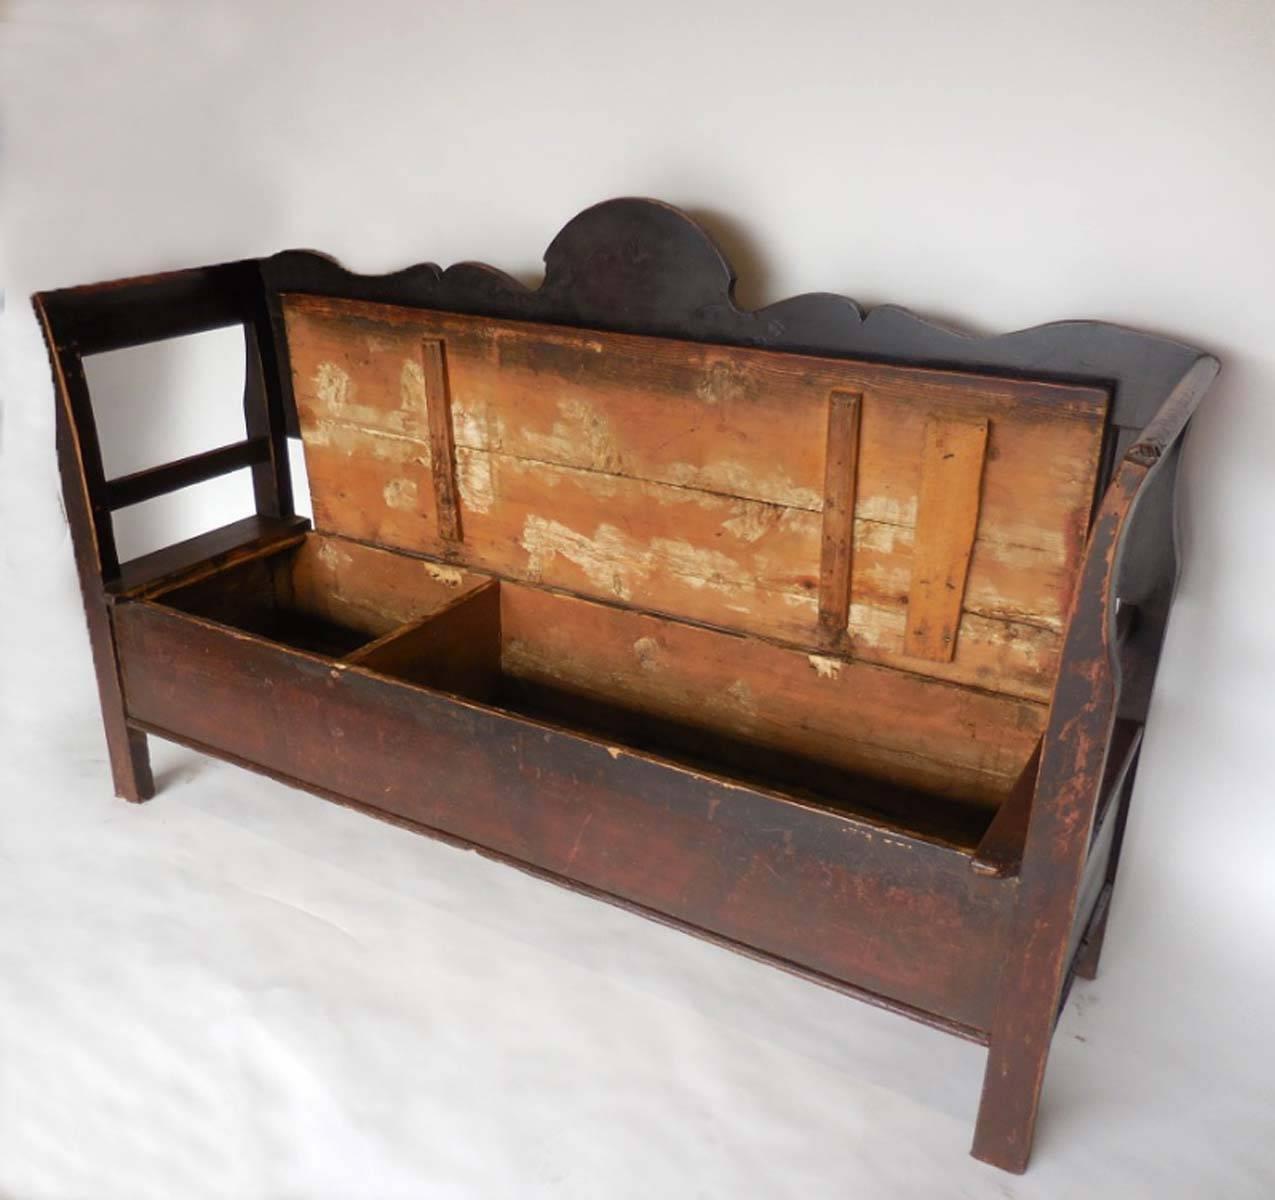 Gustavian 19th Century Northern European Bench with Lift Top Seat Storage